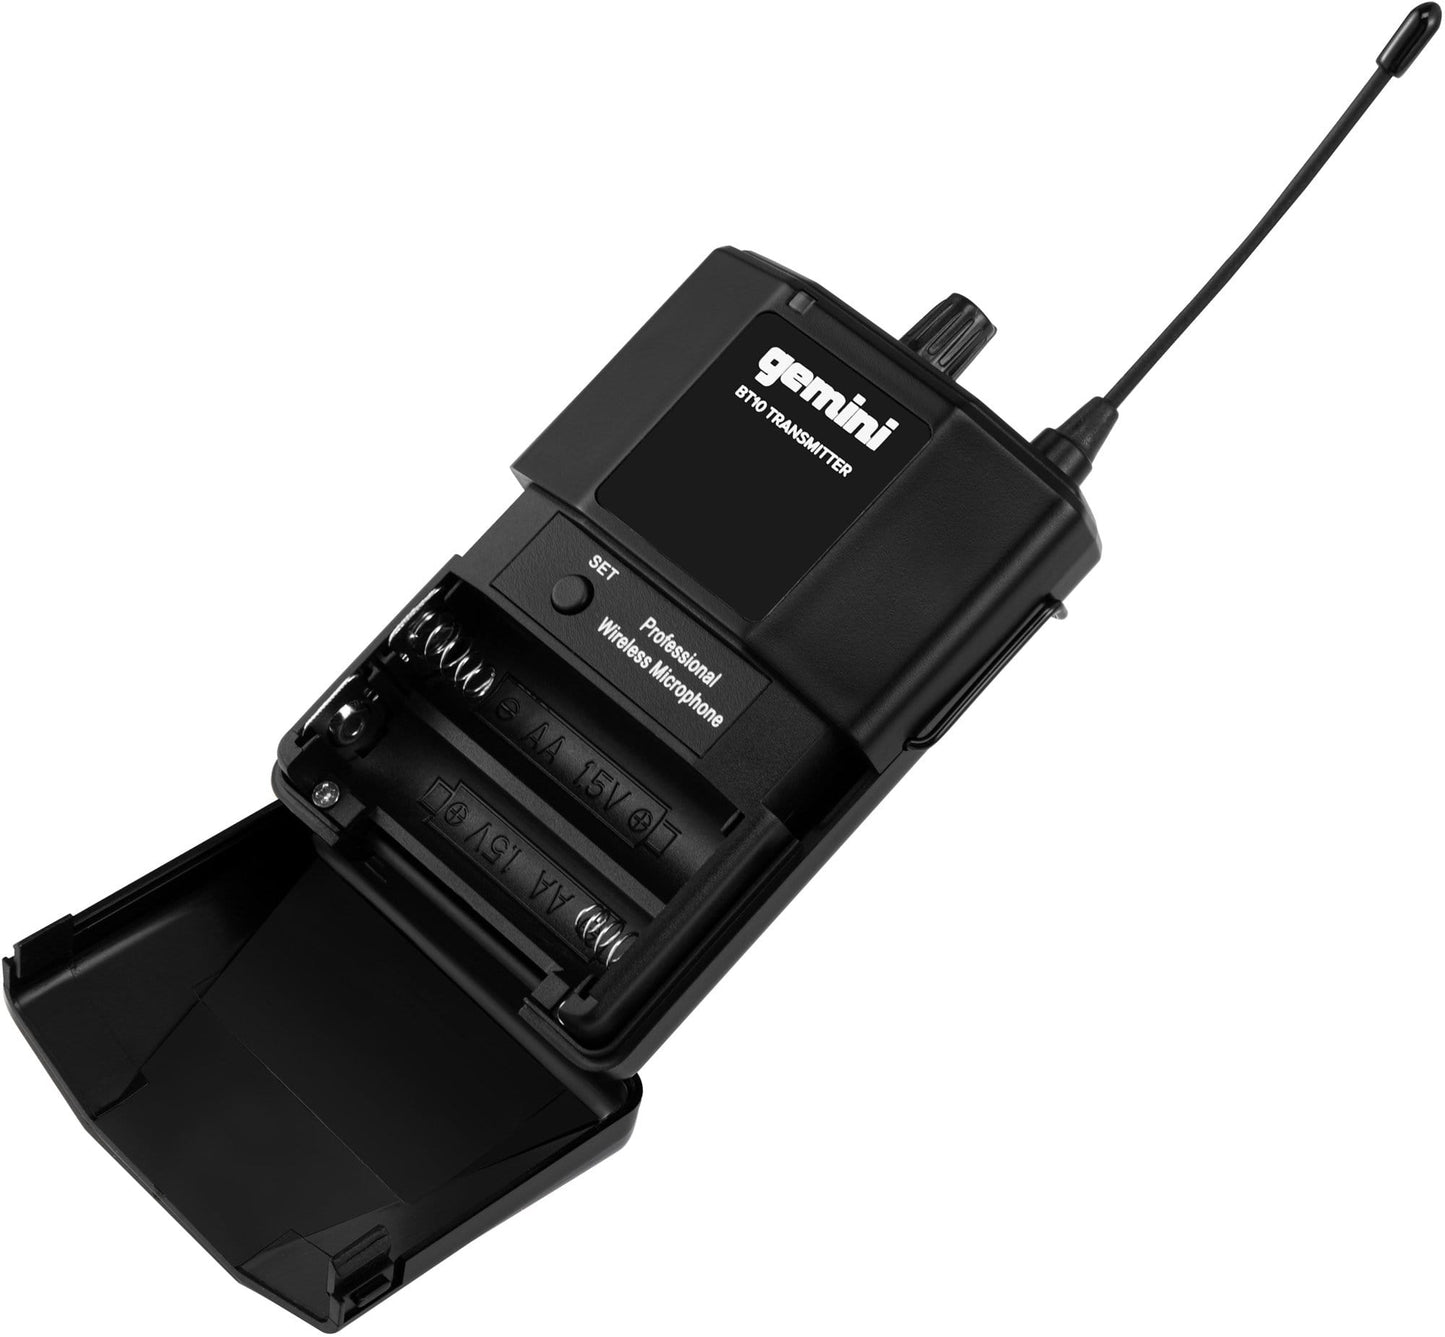 Gemini GMU-HSL100 UHF Headset Wireless Mic System - ProSound and Stage Lighting